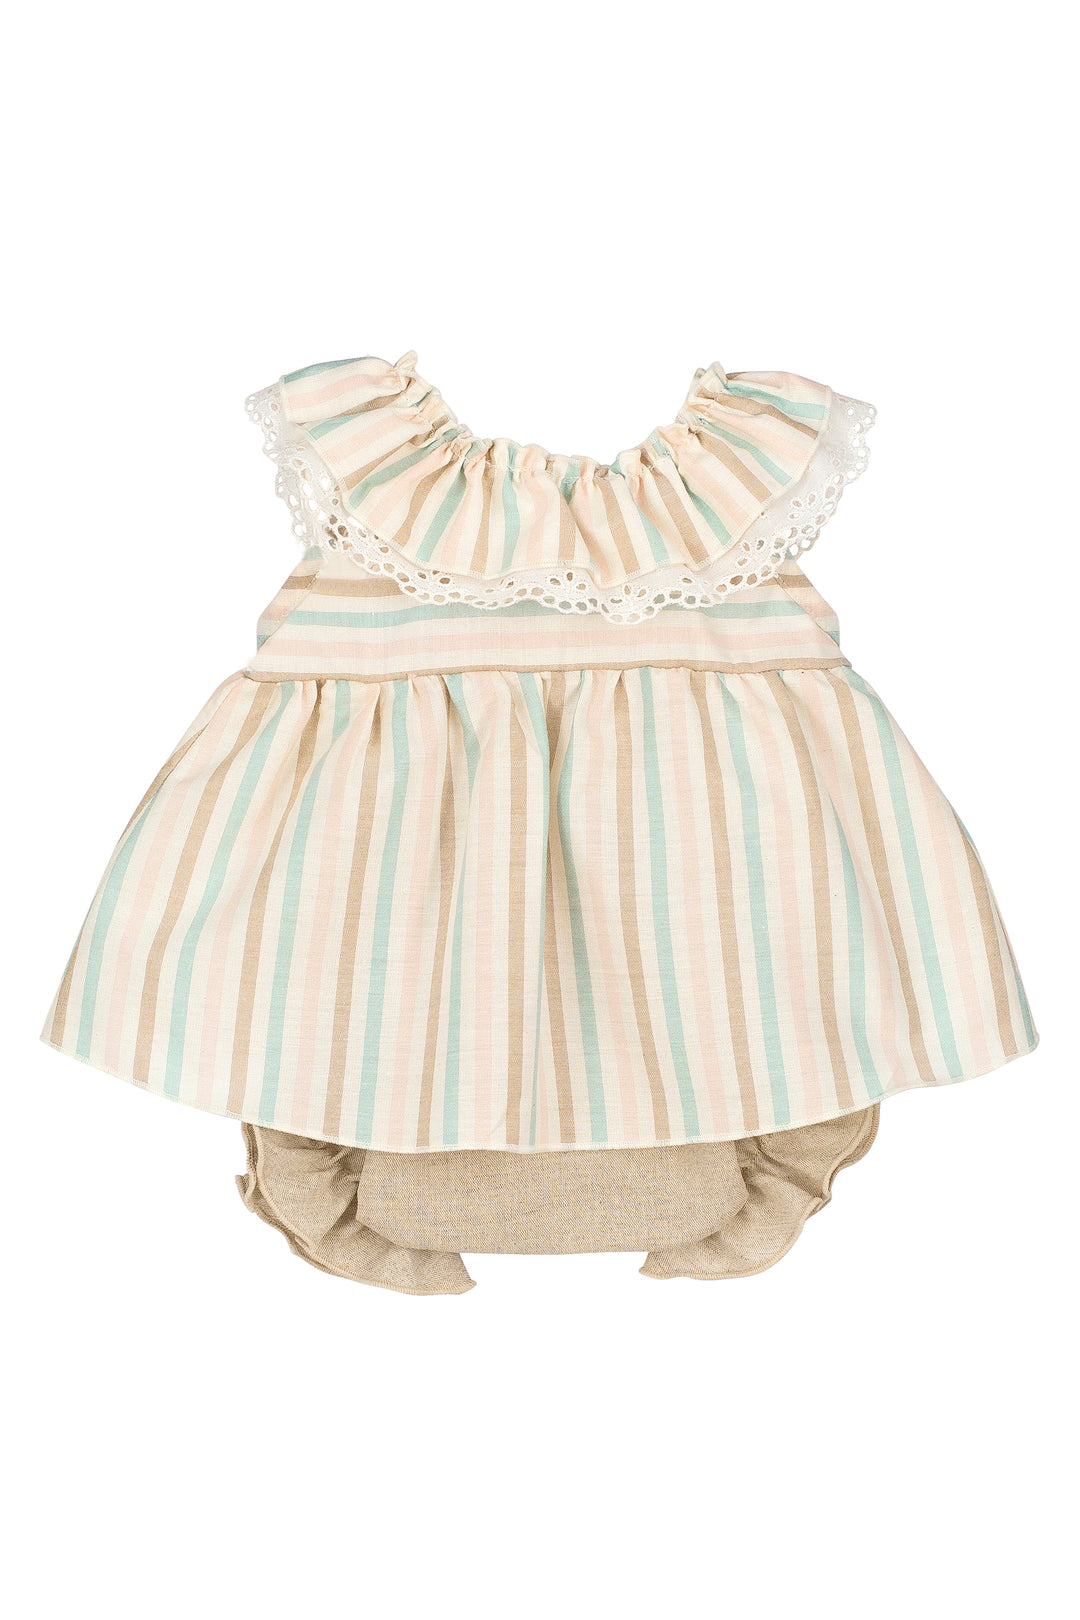 Calamaro Excellentt "Tillie" Pastel Striped Dress & Bloomers | Millie and John